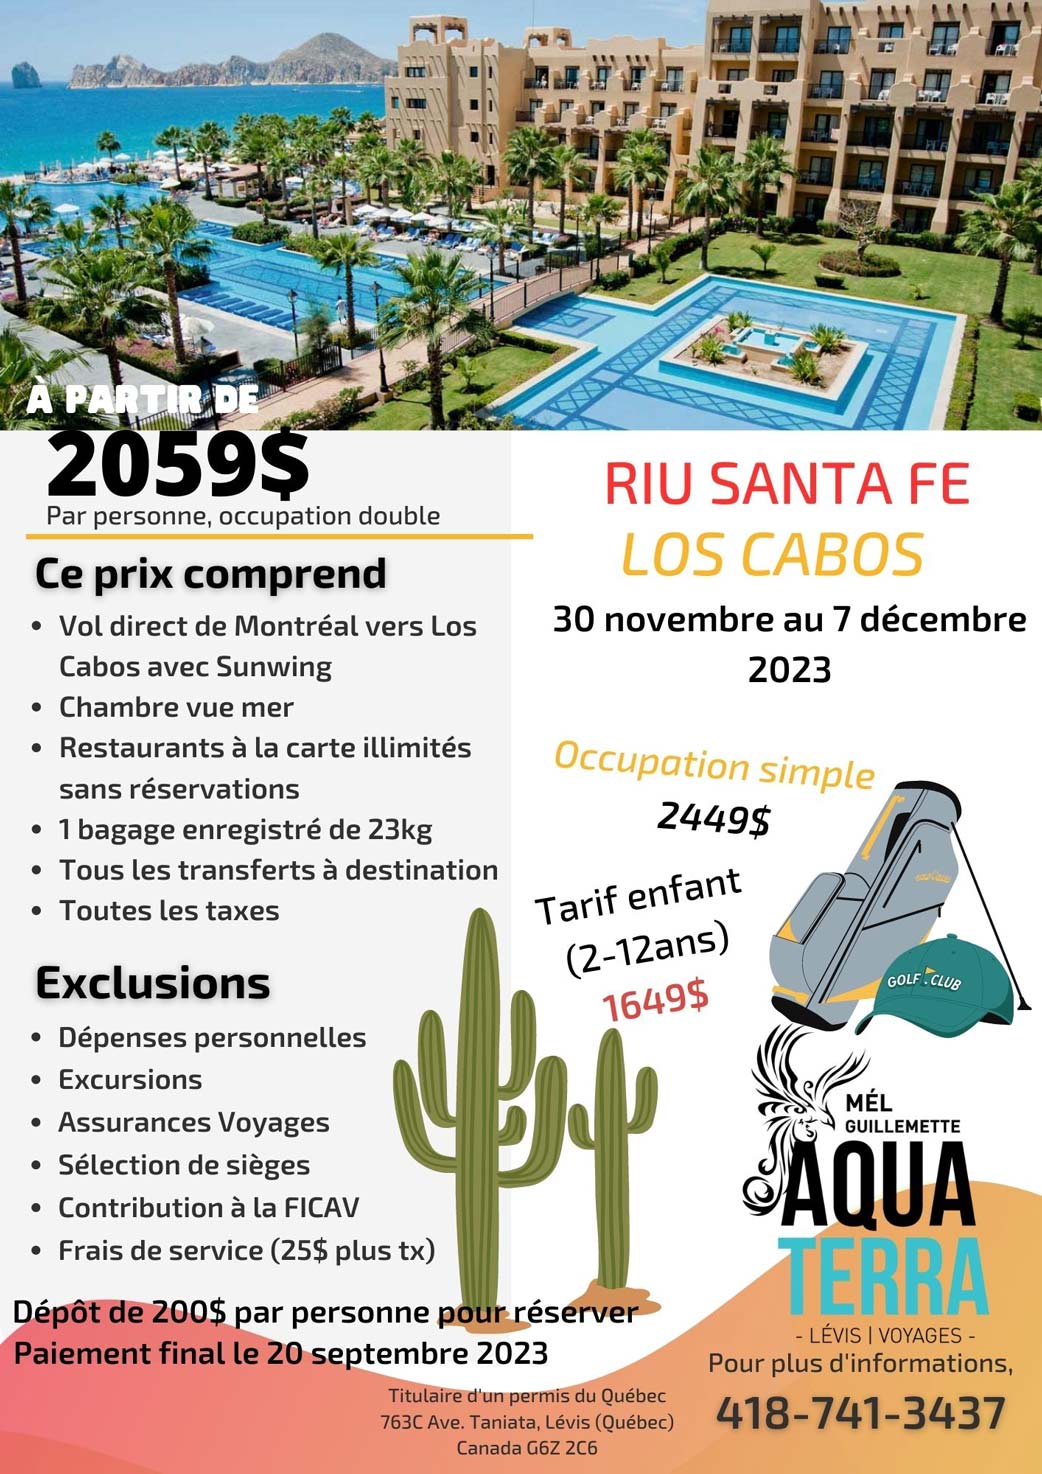 Voyage au Riu Santa Fe de Los Cabos du 30 novembre au 7 décembre 2023